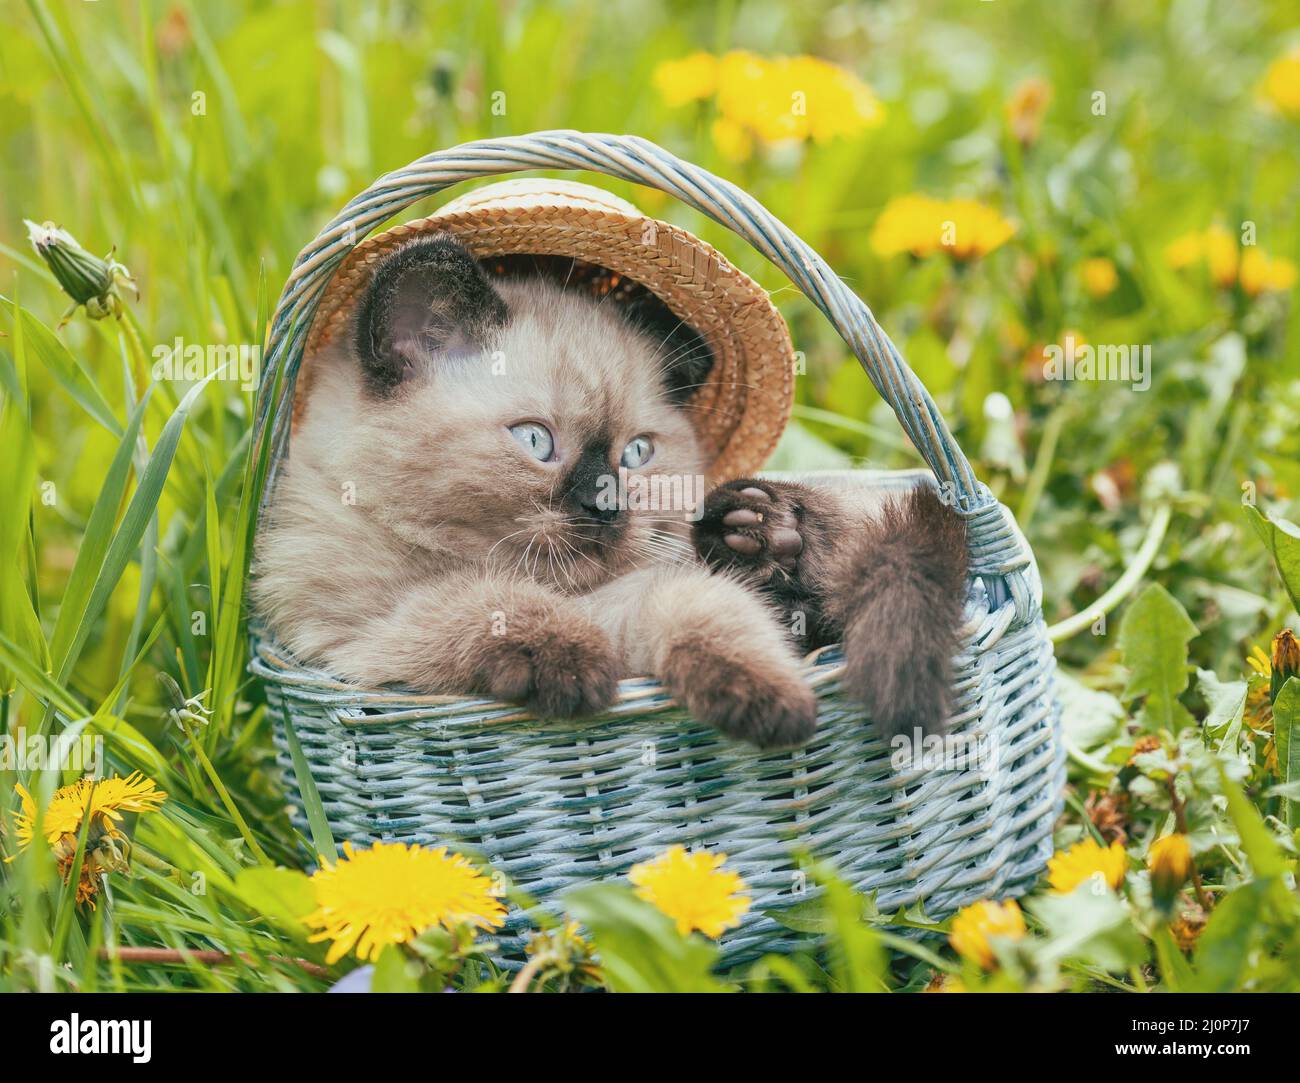 Little kitten wearing straw hat lying in a basket on the grass in spring Stock Photo